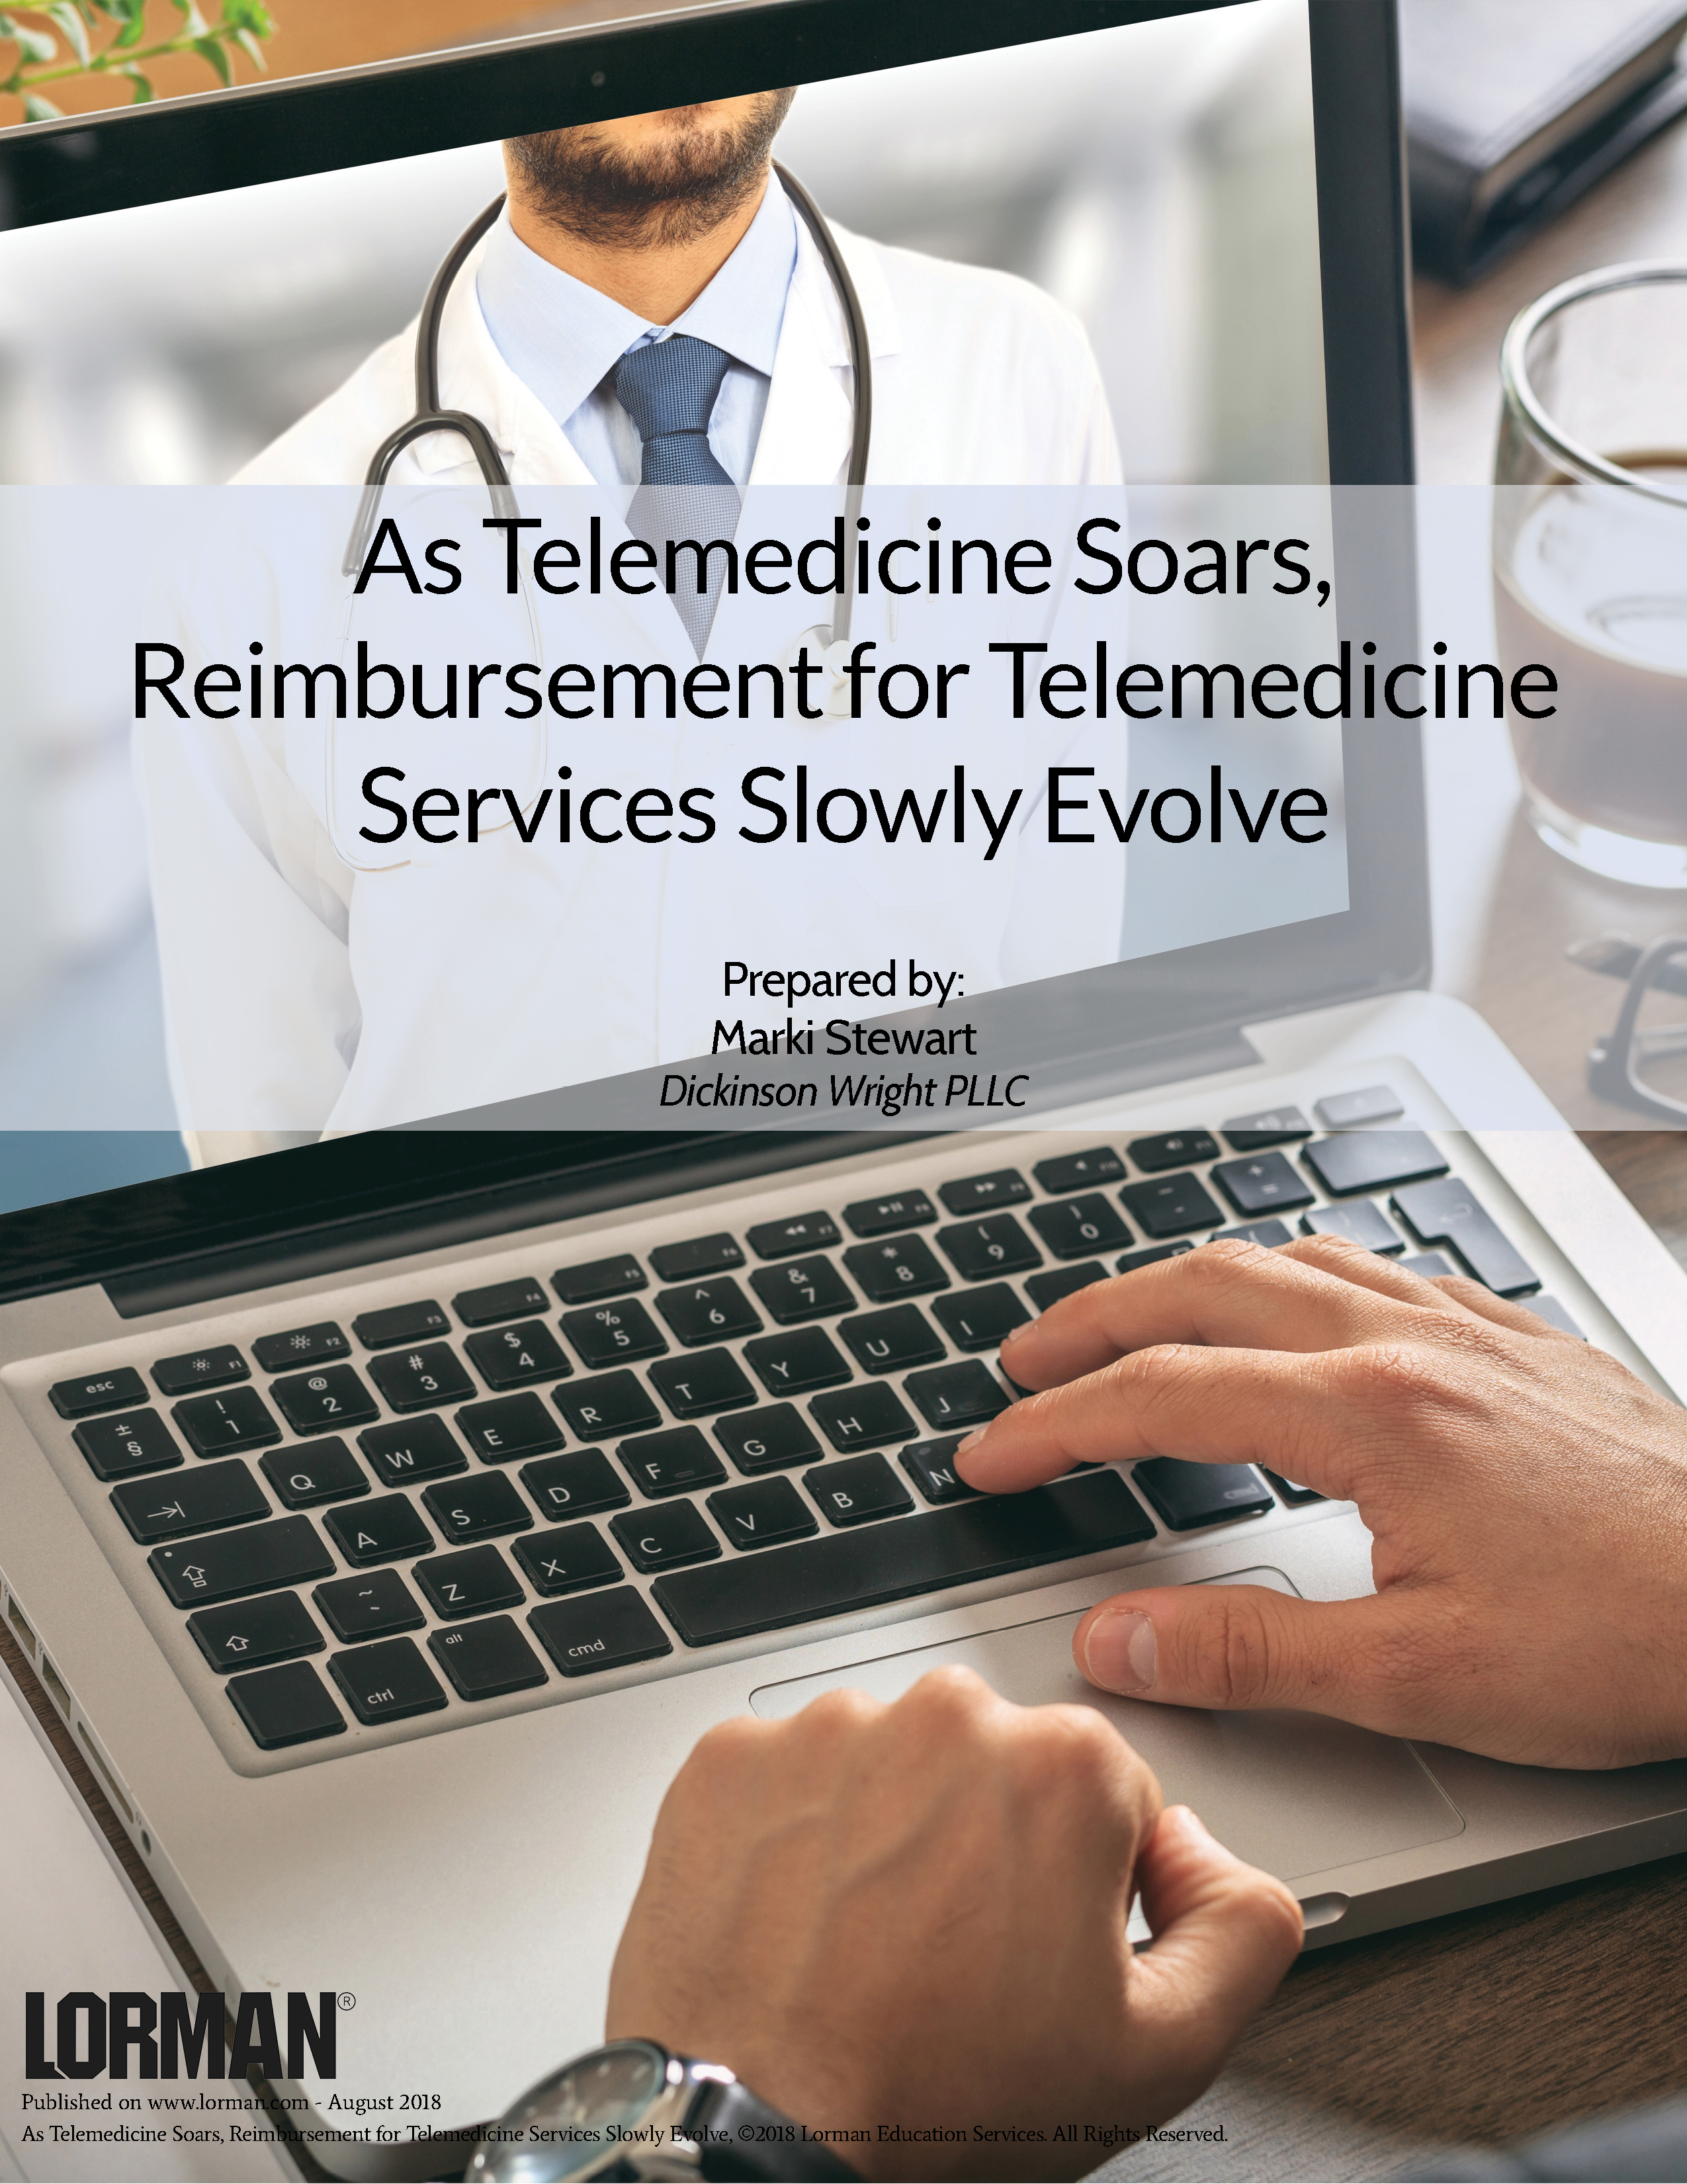 As Telemedicine Soars, Reimbursement for Telemedicine Services Slowly Evolve